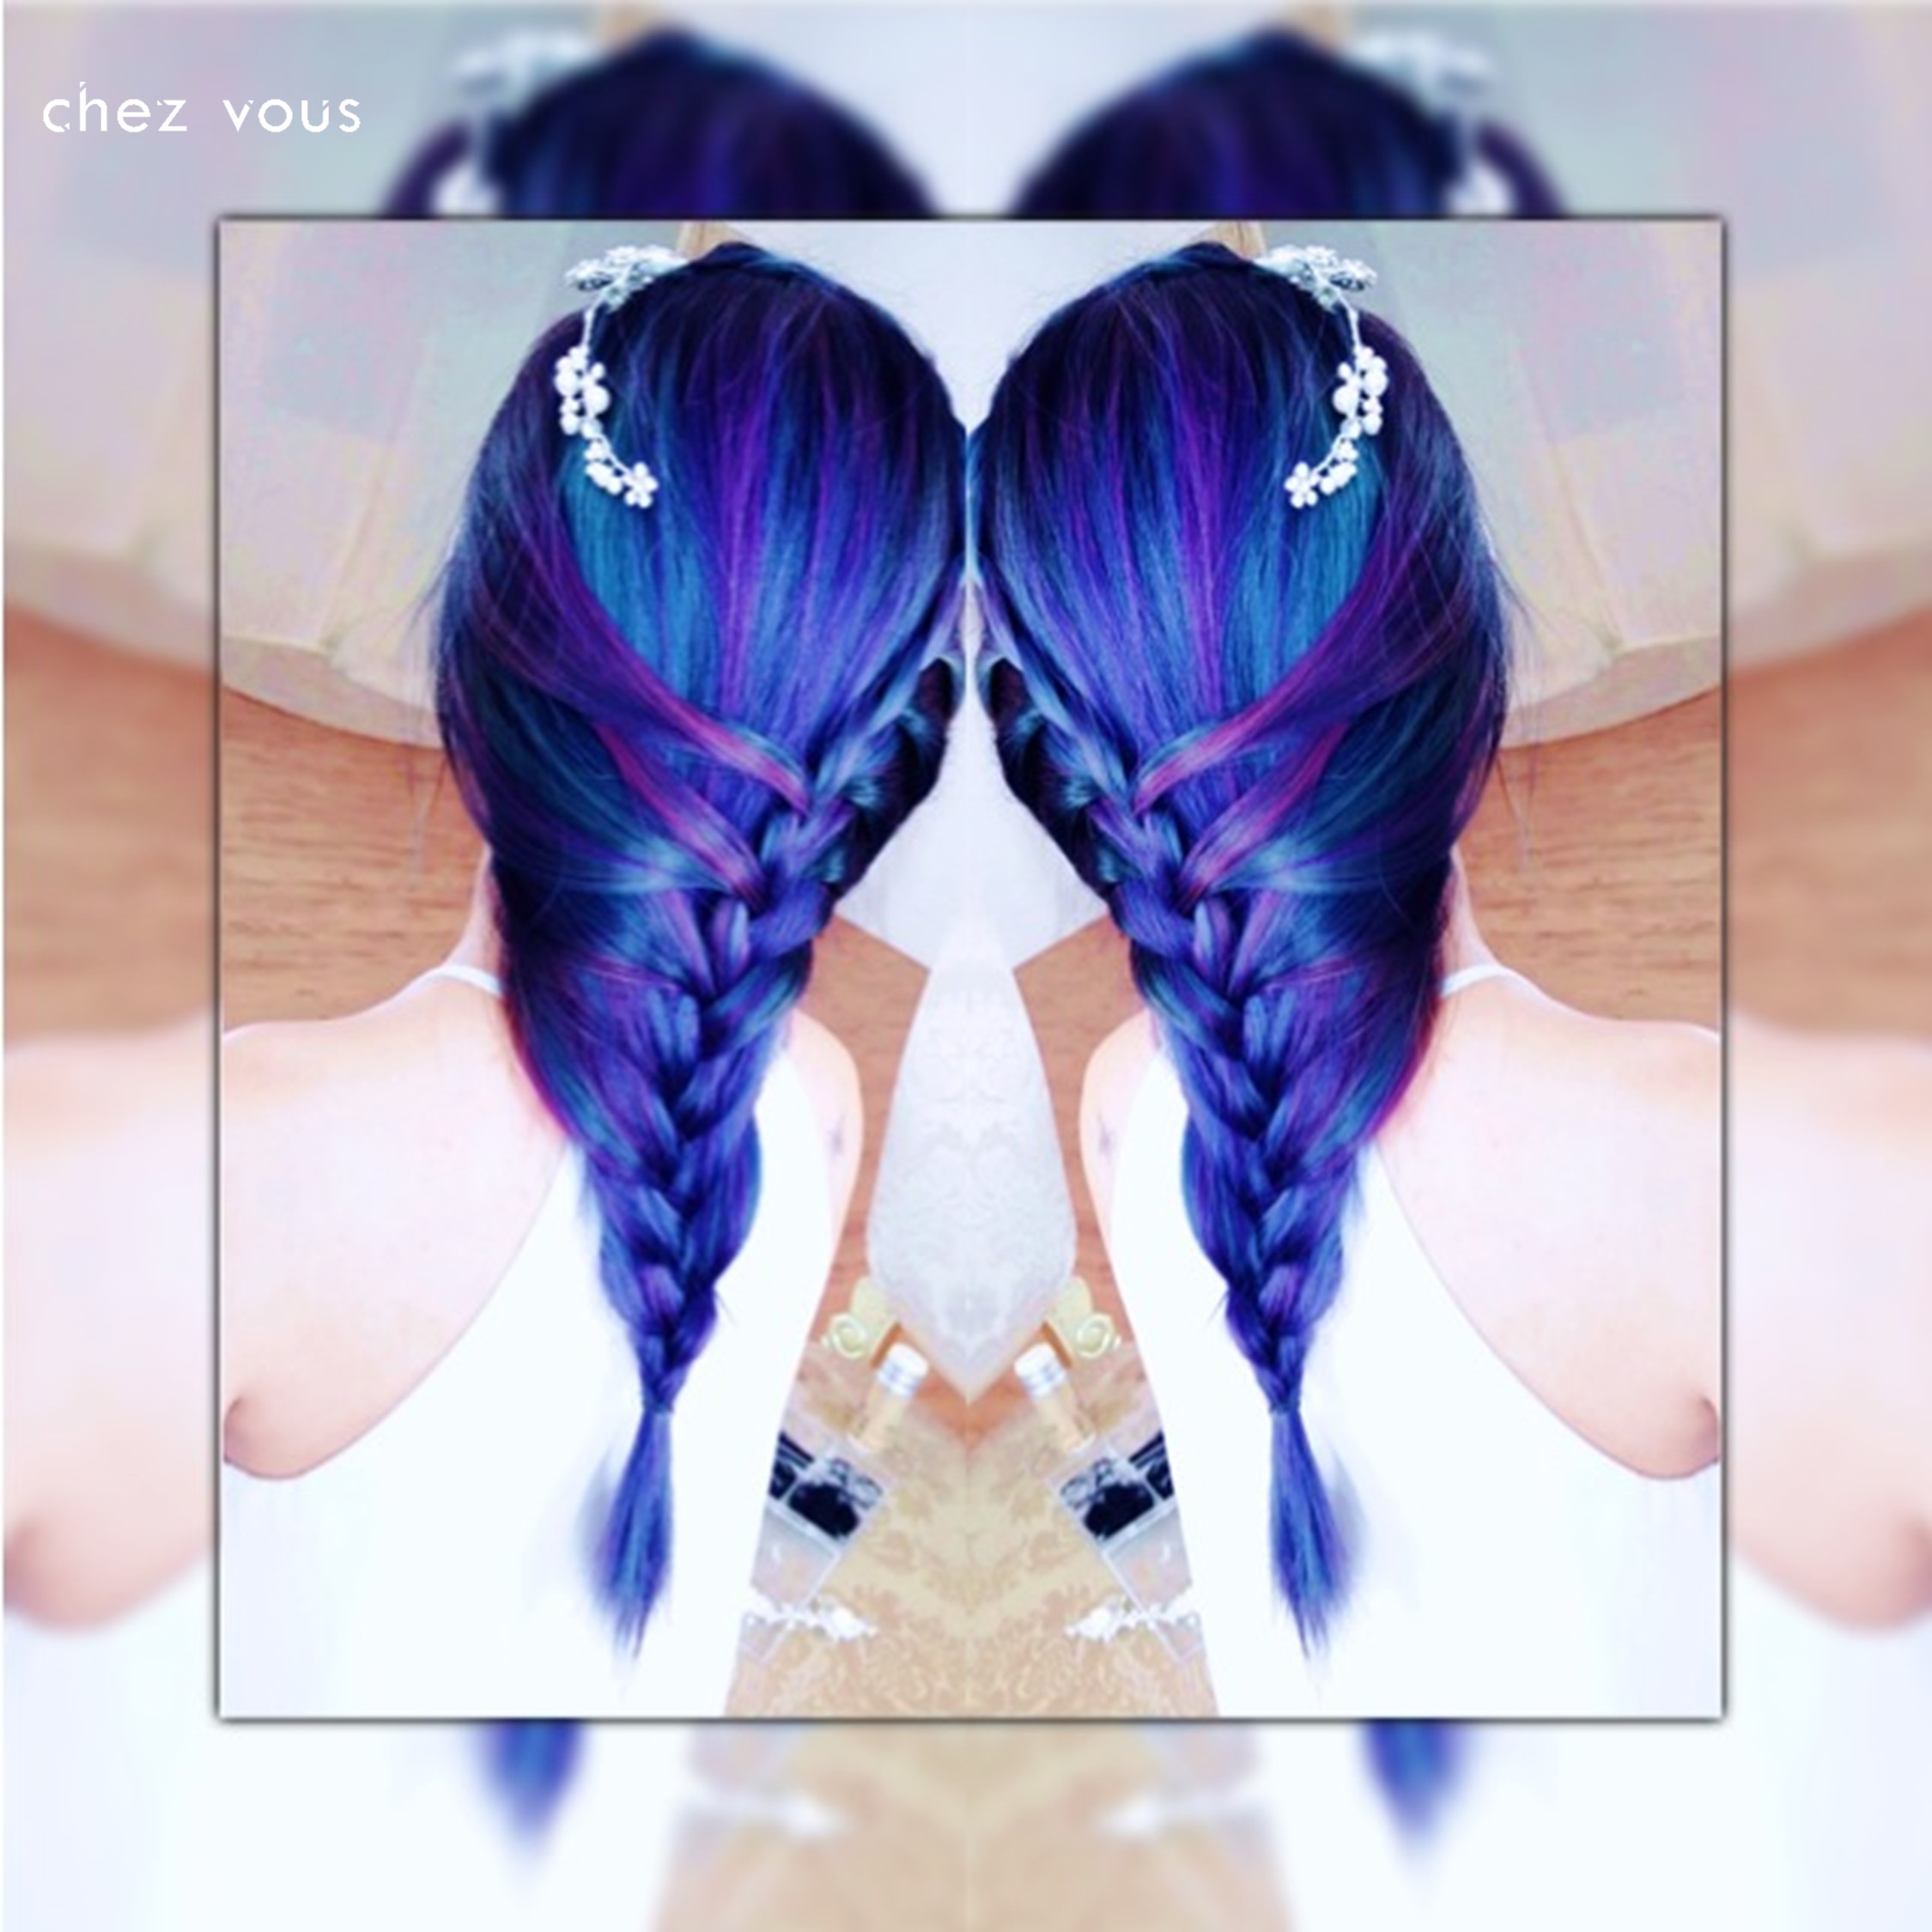 Done by Associate Salon Director of Chez Vous: Oscar Lee | Design: Compound Galaxy Hair Colours